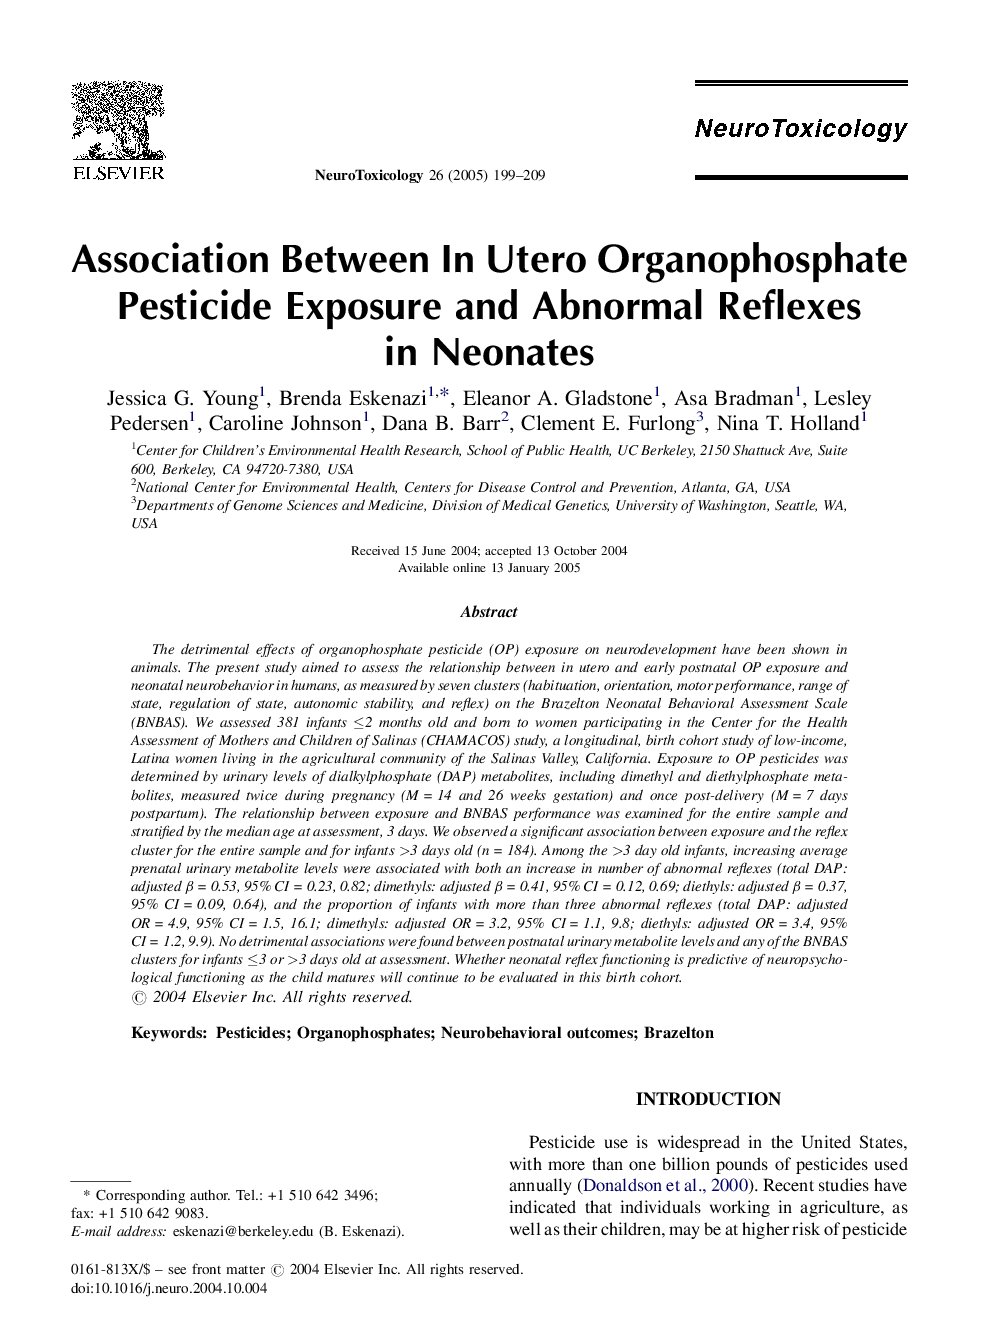 Association Between In Utero Organophosphate Pesticide Exposure and Abnormal Reflexes in Neonates